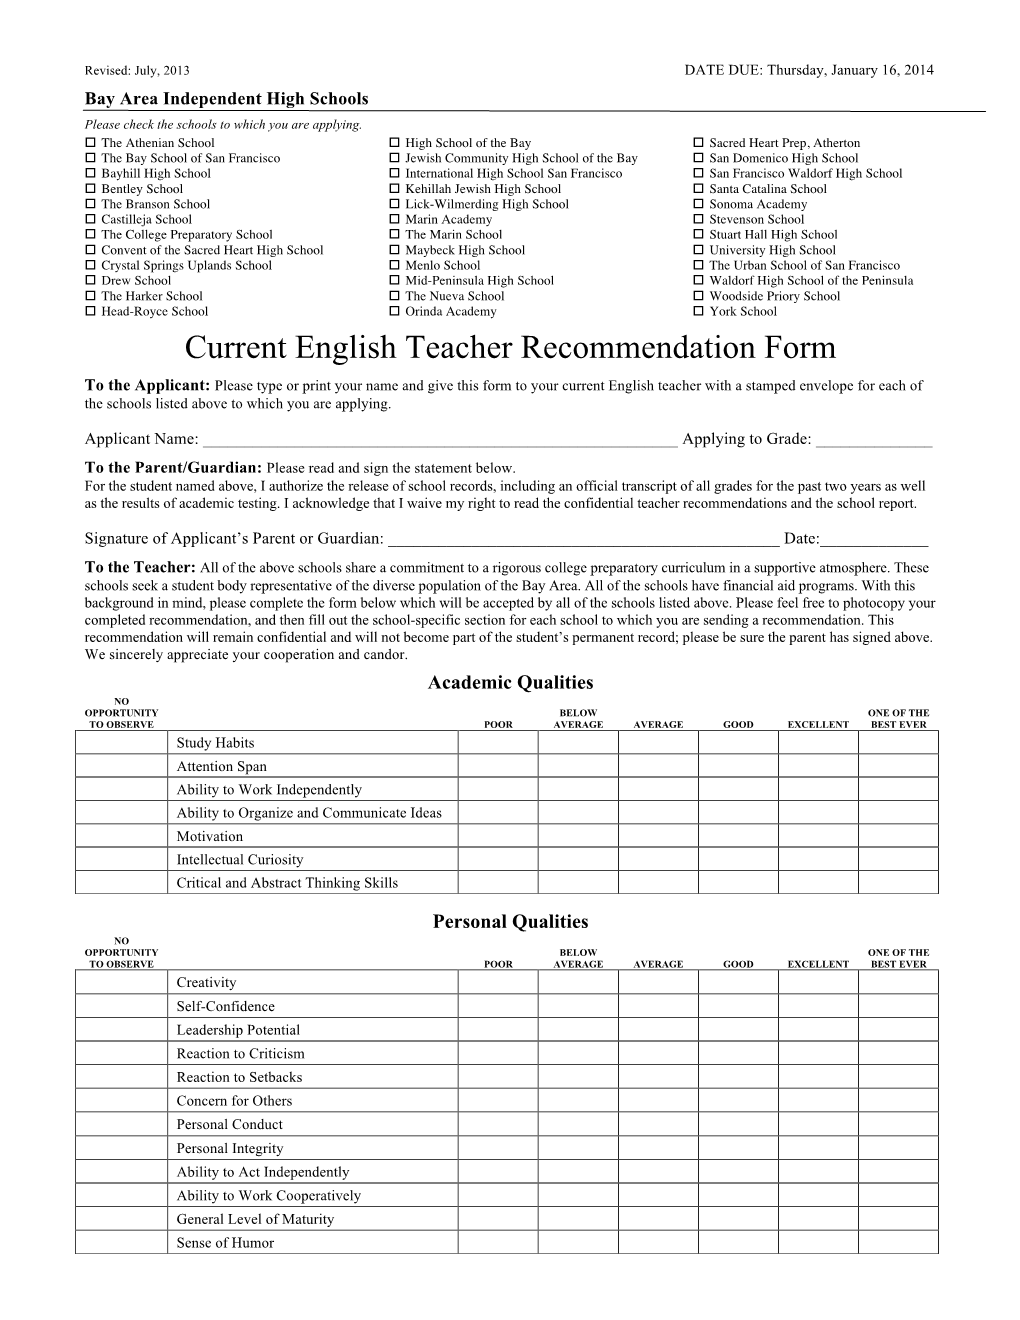 Current English Teacher Recommendation Form